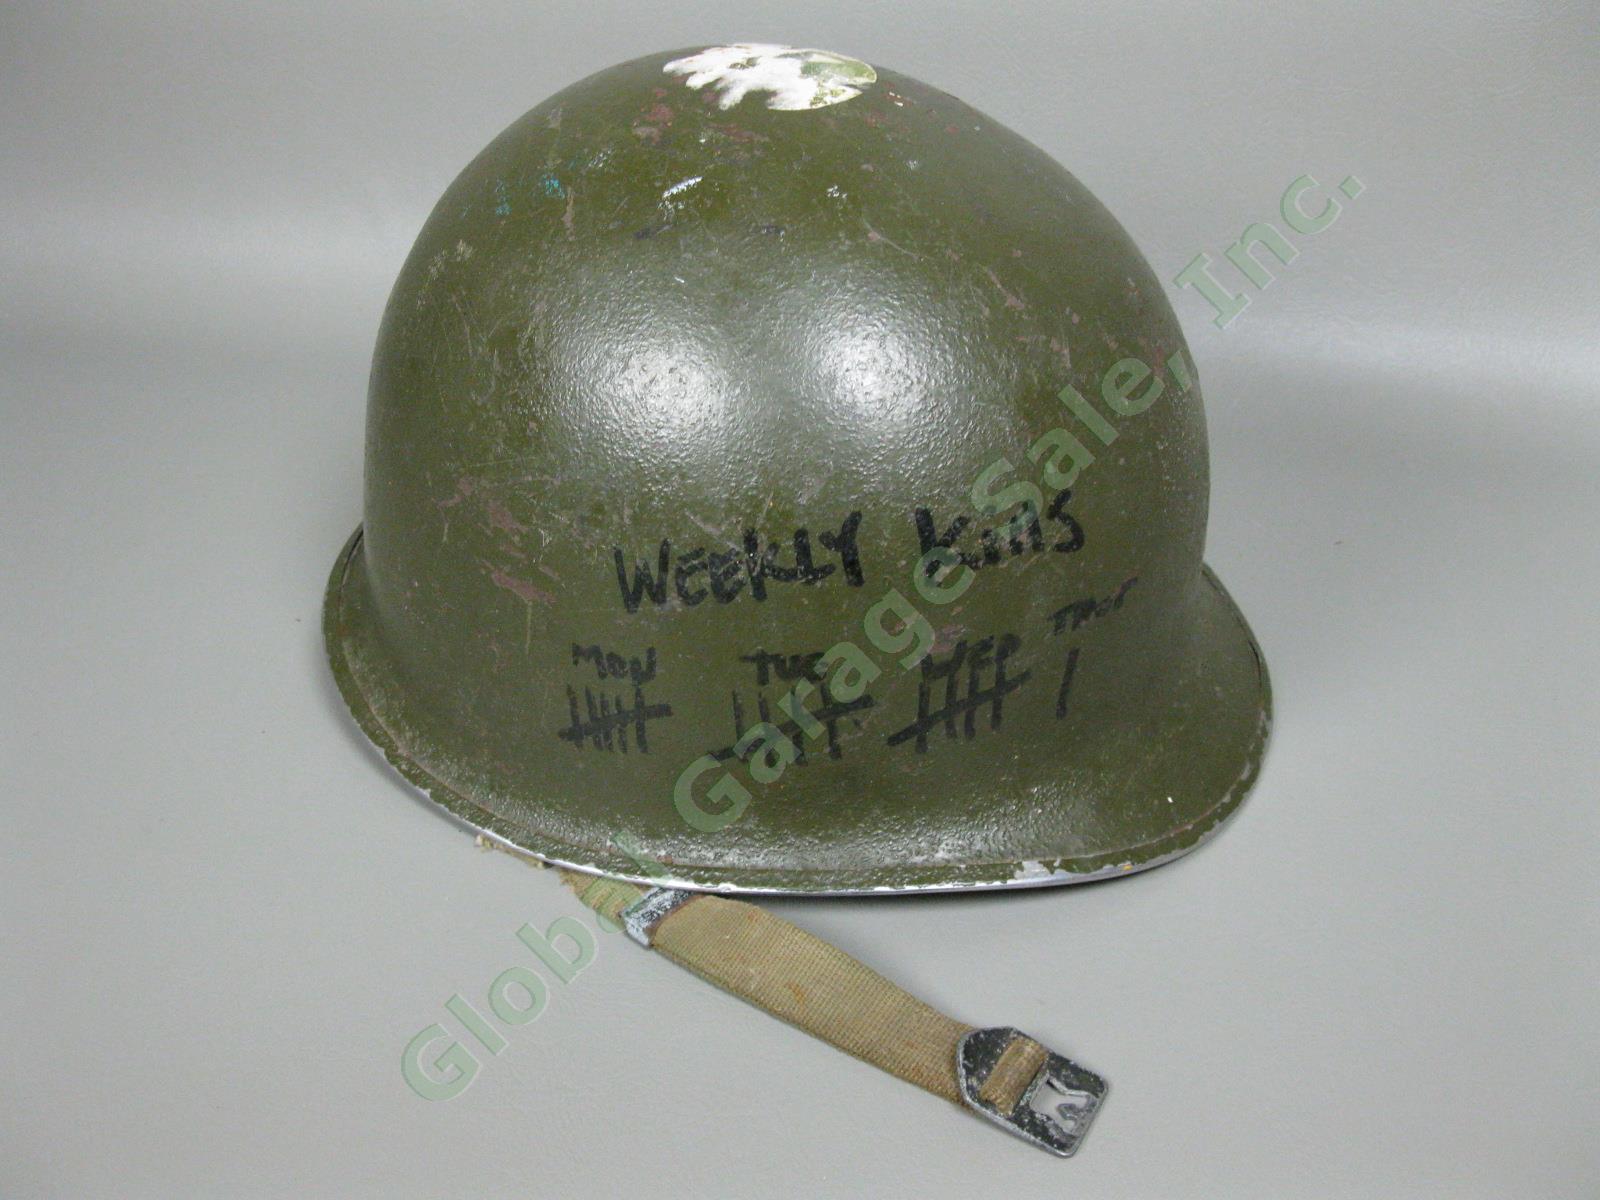 Vintage M1 Fixed Bale US Military Combat Helmet WWII Era Steel Bucket w/ Decal